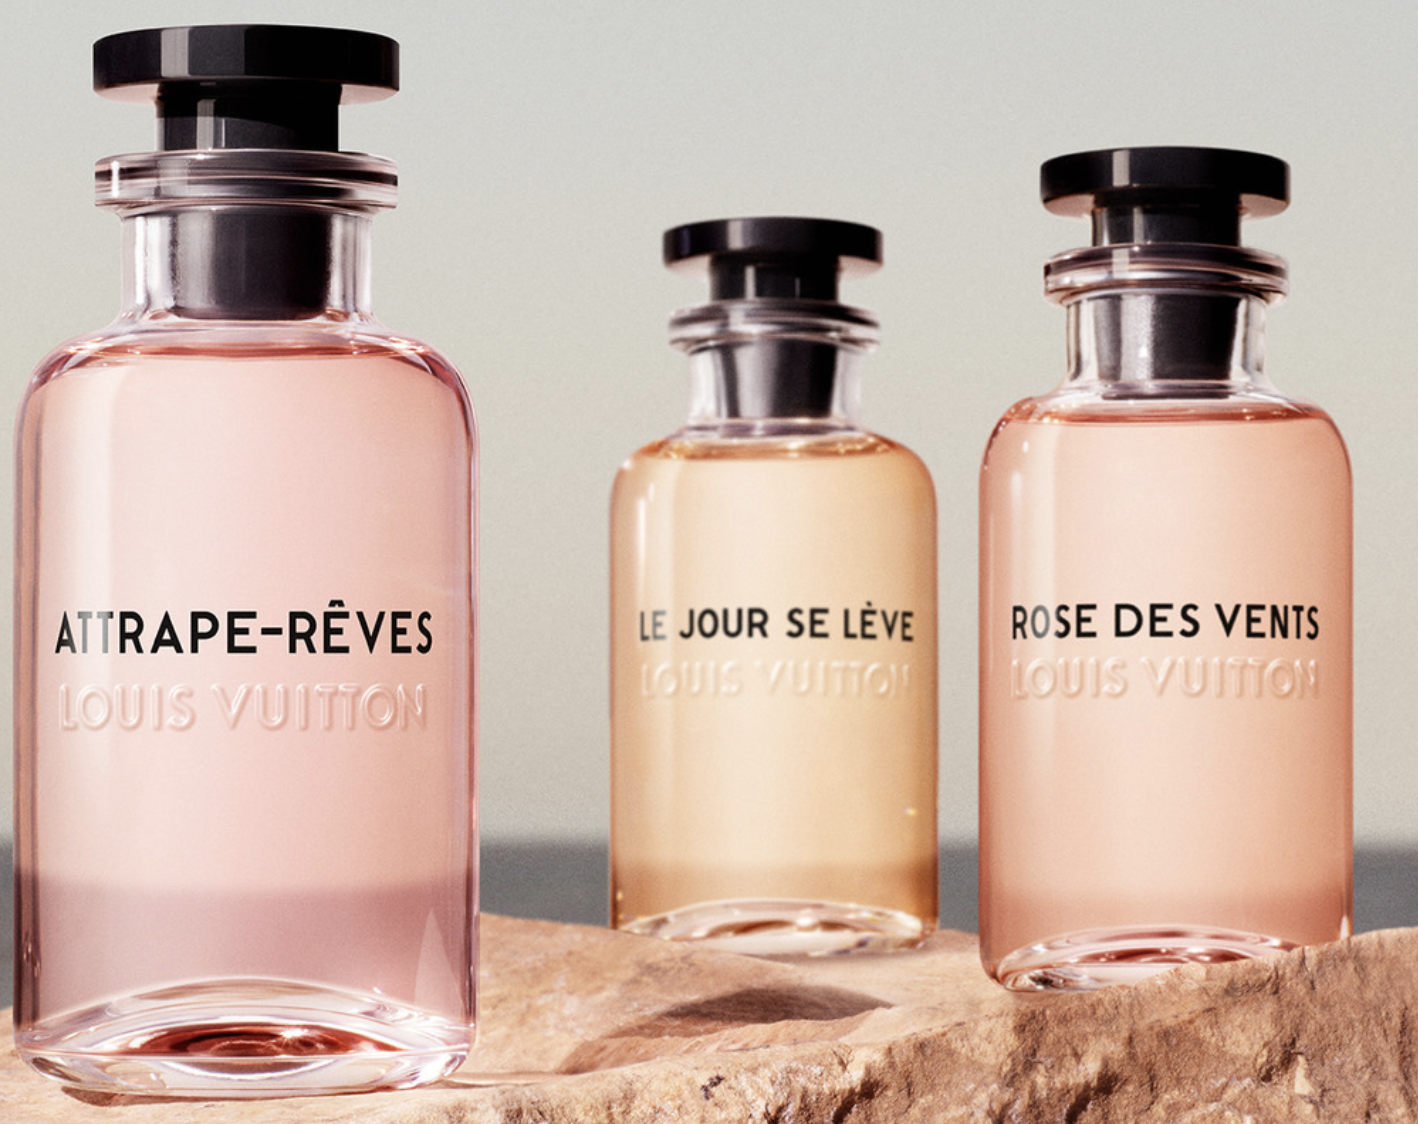 The new Louis Vuitton fragrance bottles hide inside them, the